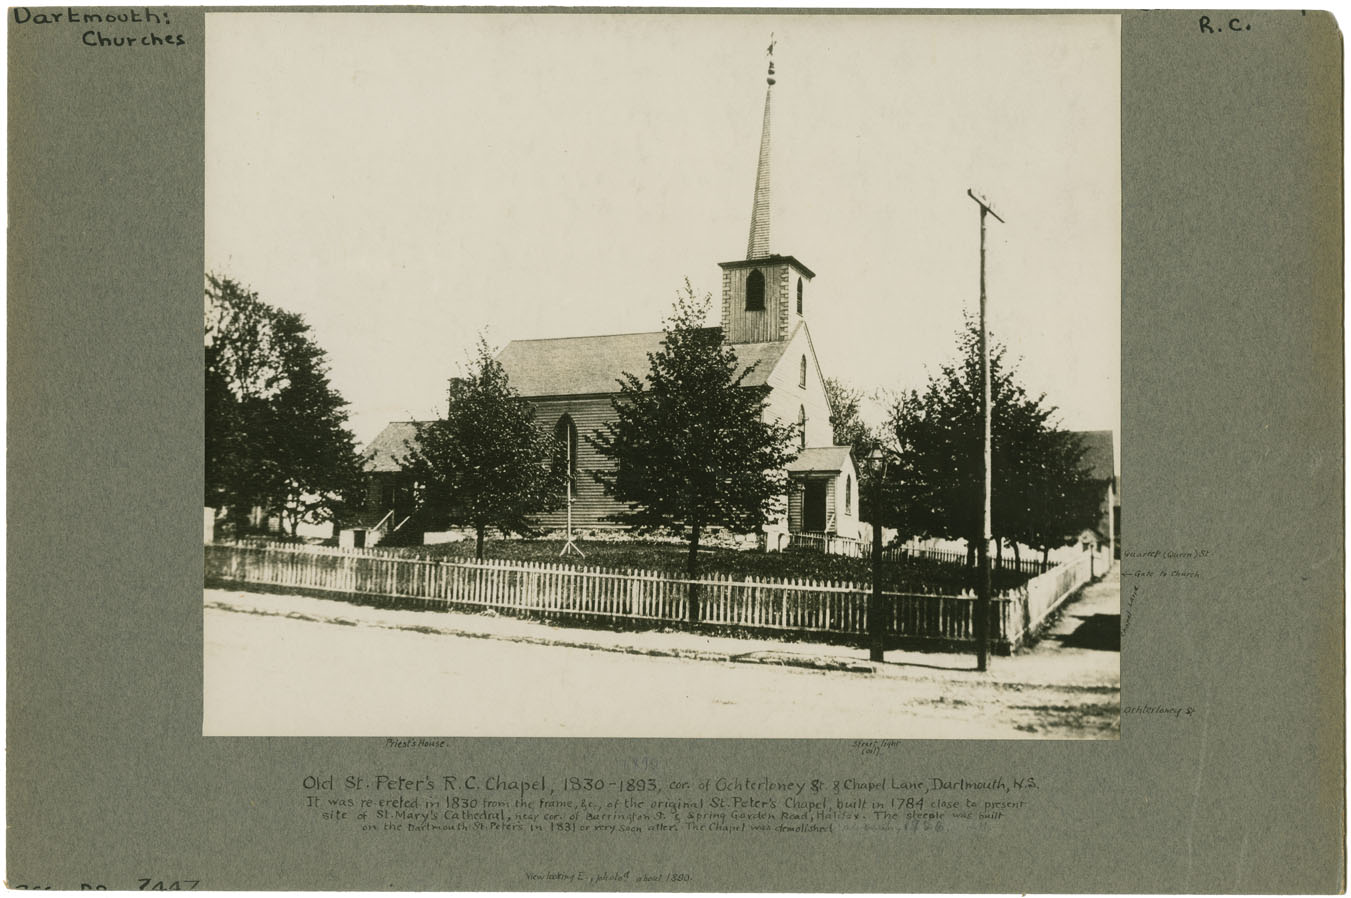 Places: Dartmouth, Halifax Co.: Churches: St. Peter's Chapel: Old St. Peter's Chapel 1830-1893, corner Ochterloney & Chapel Lane